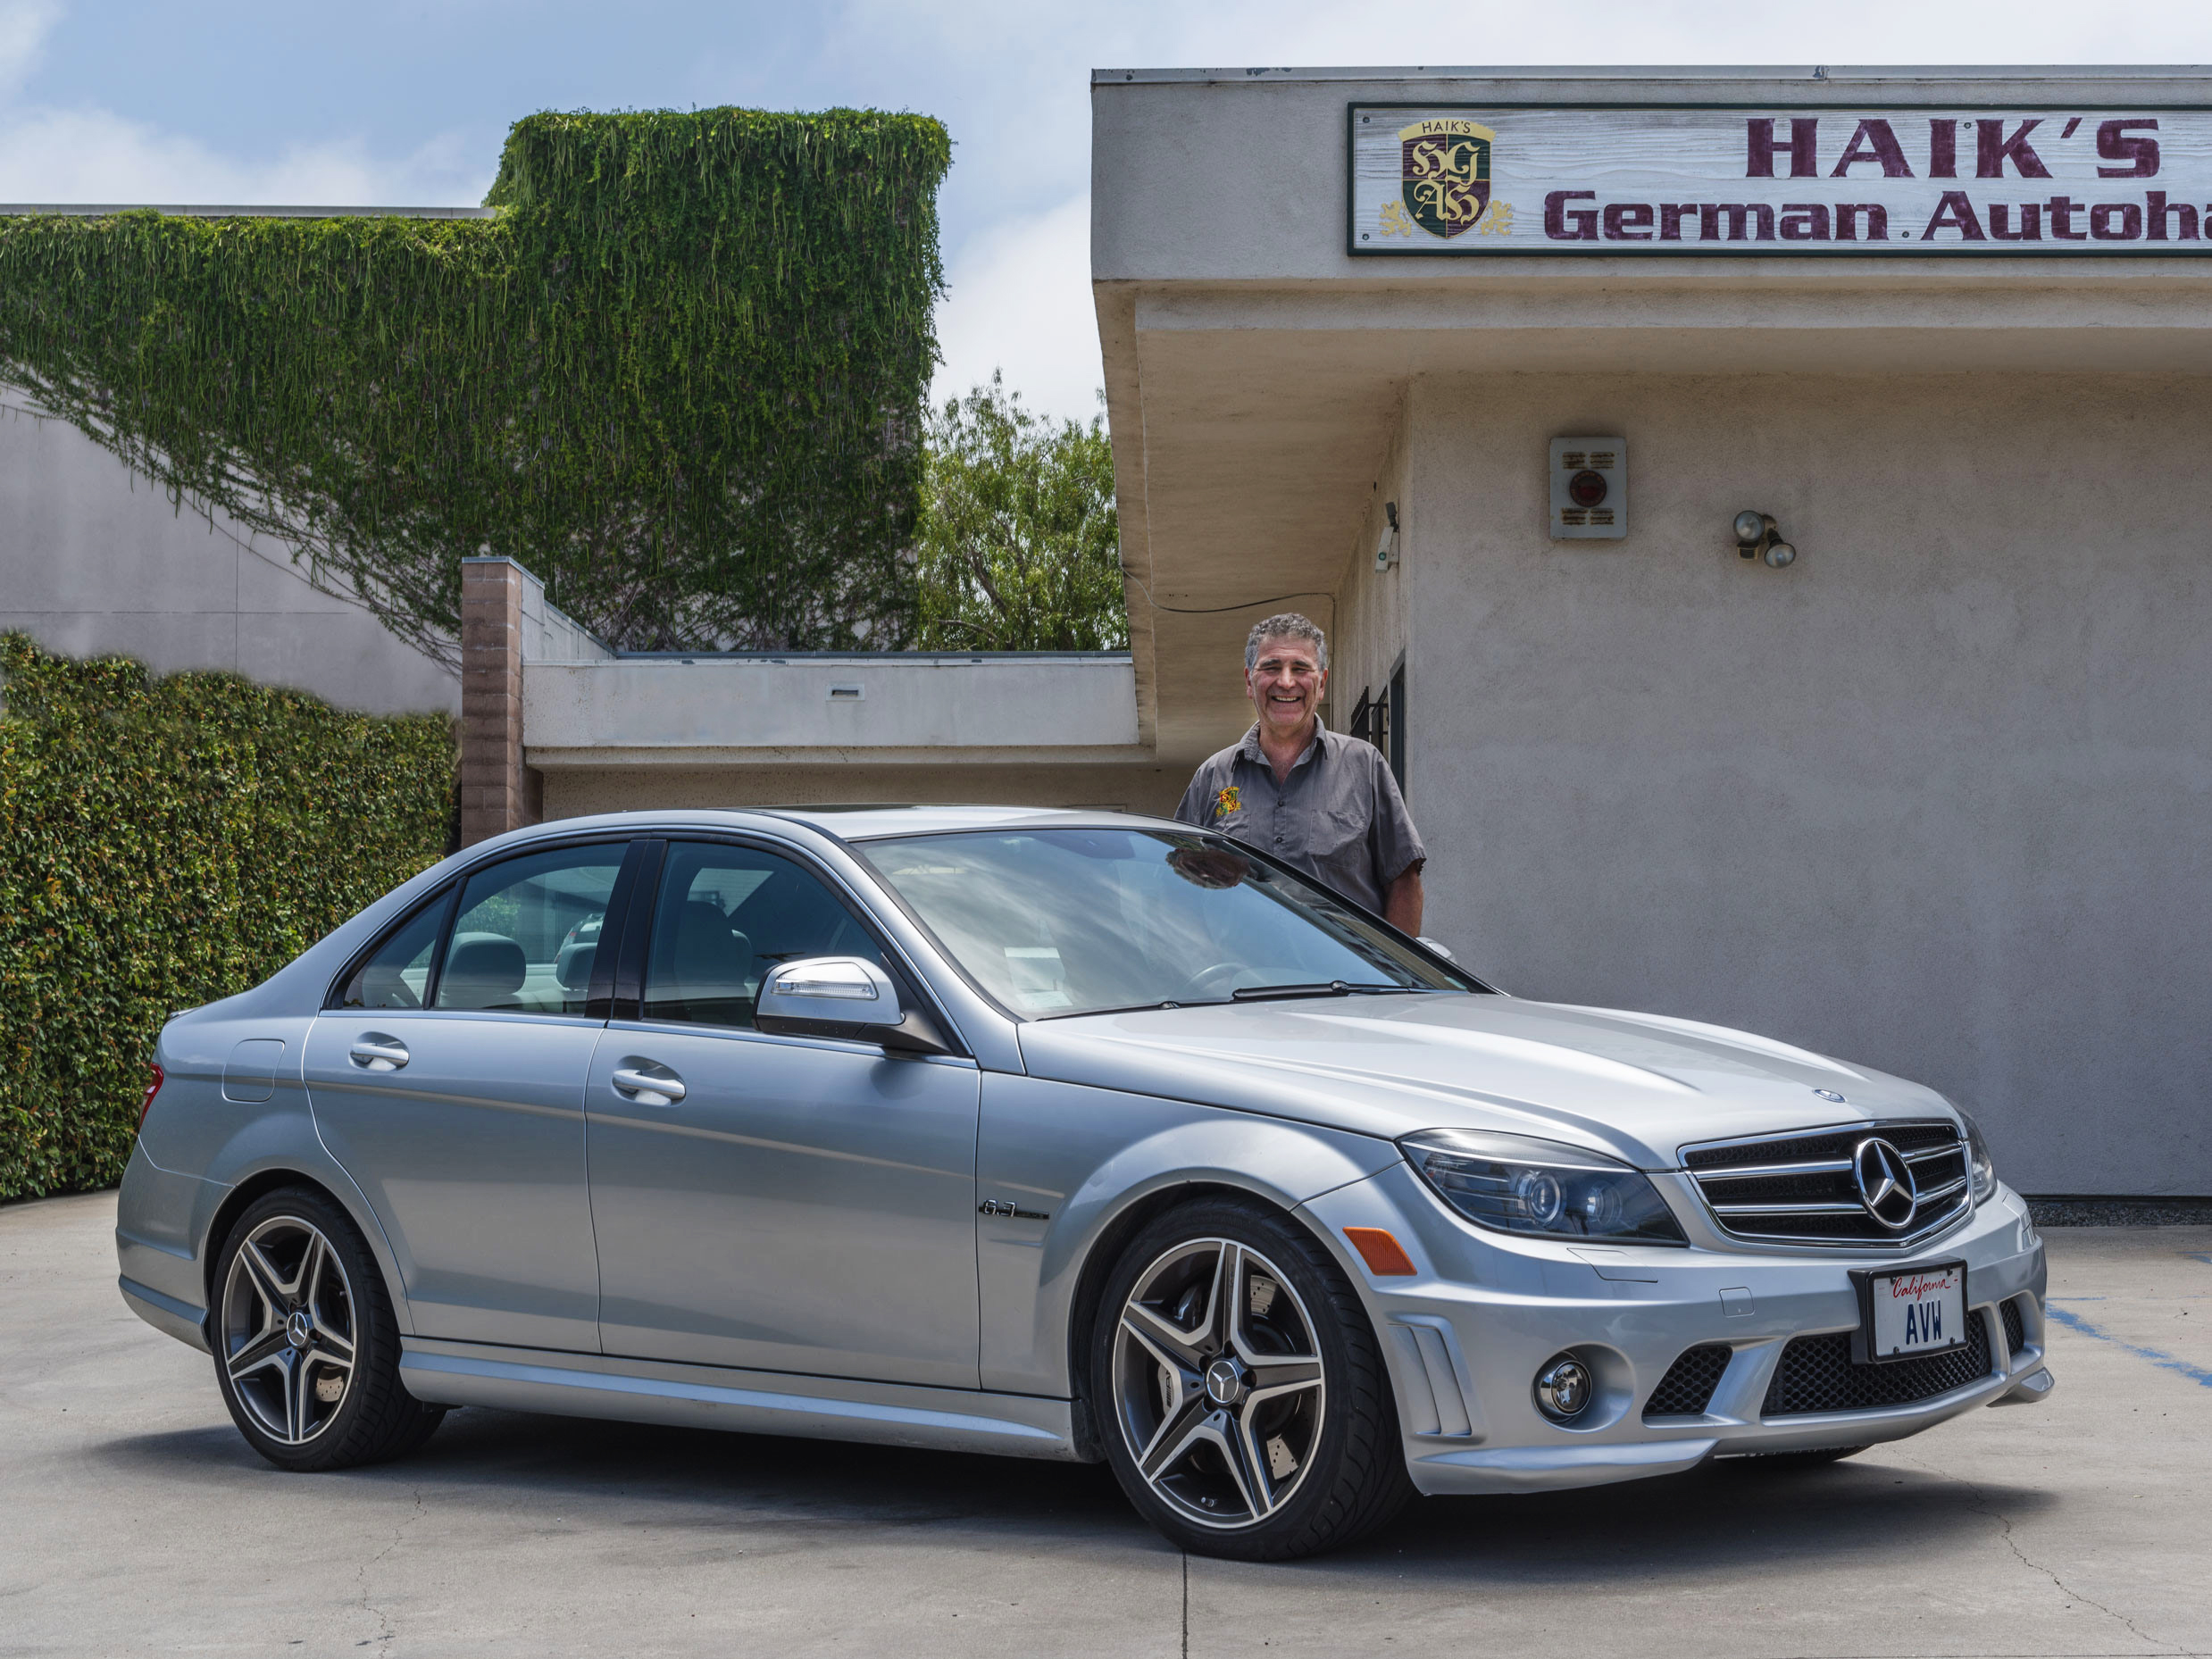 View of Haik and repaired Mercedes sedan at Haik's German Autohaus